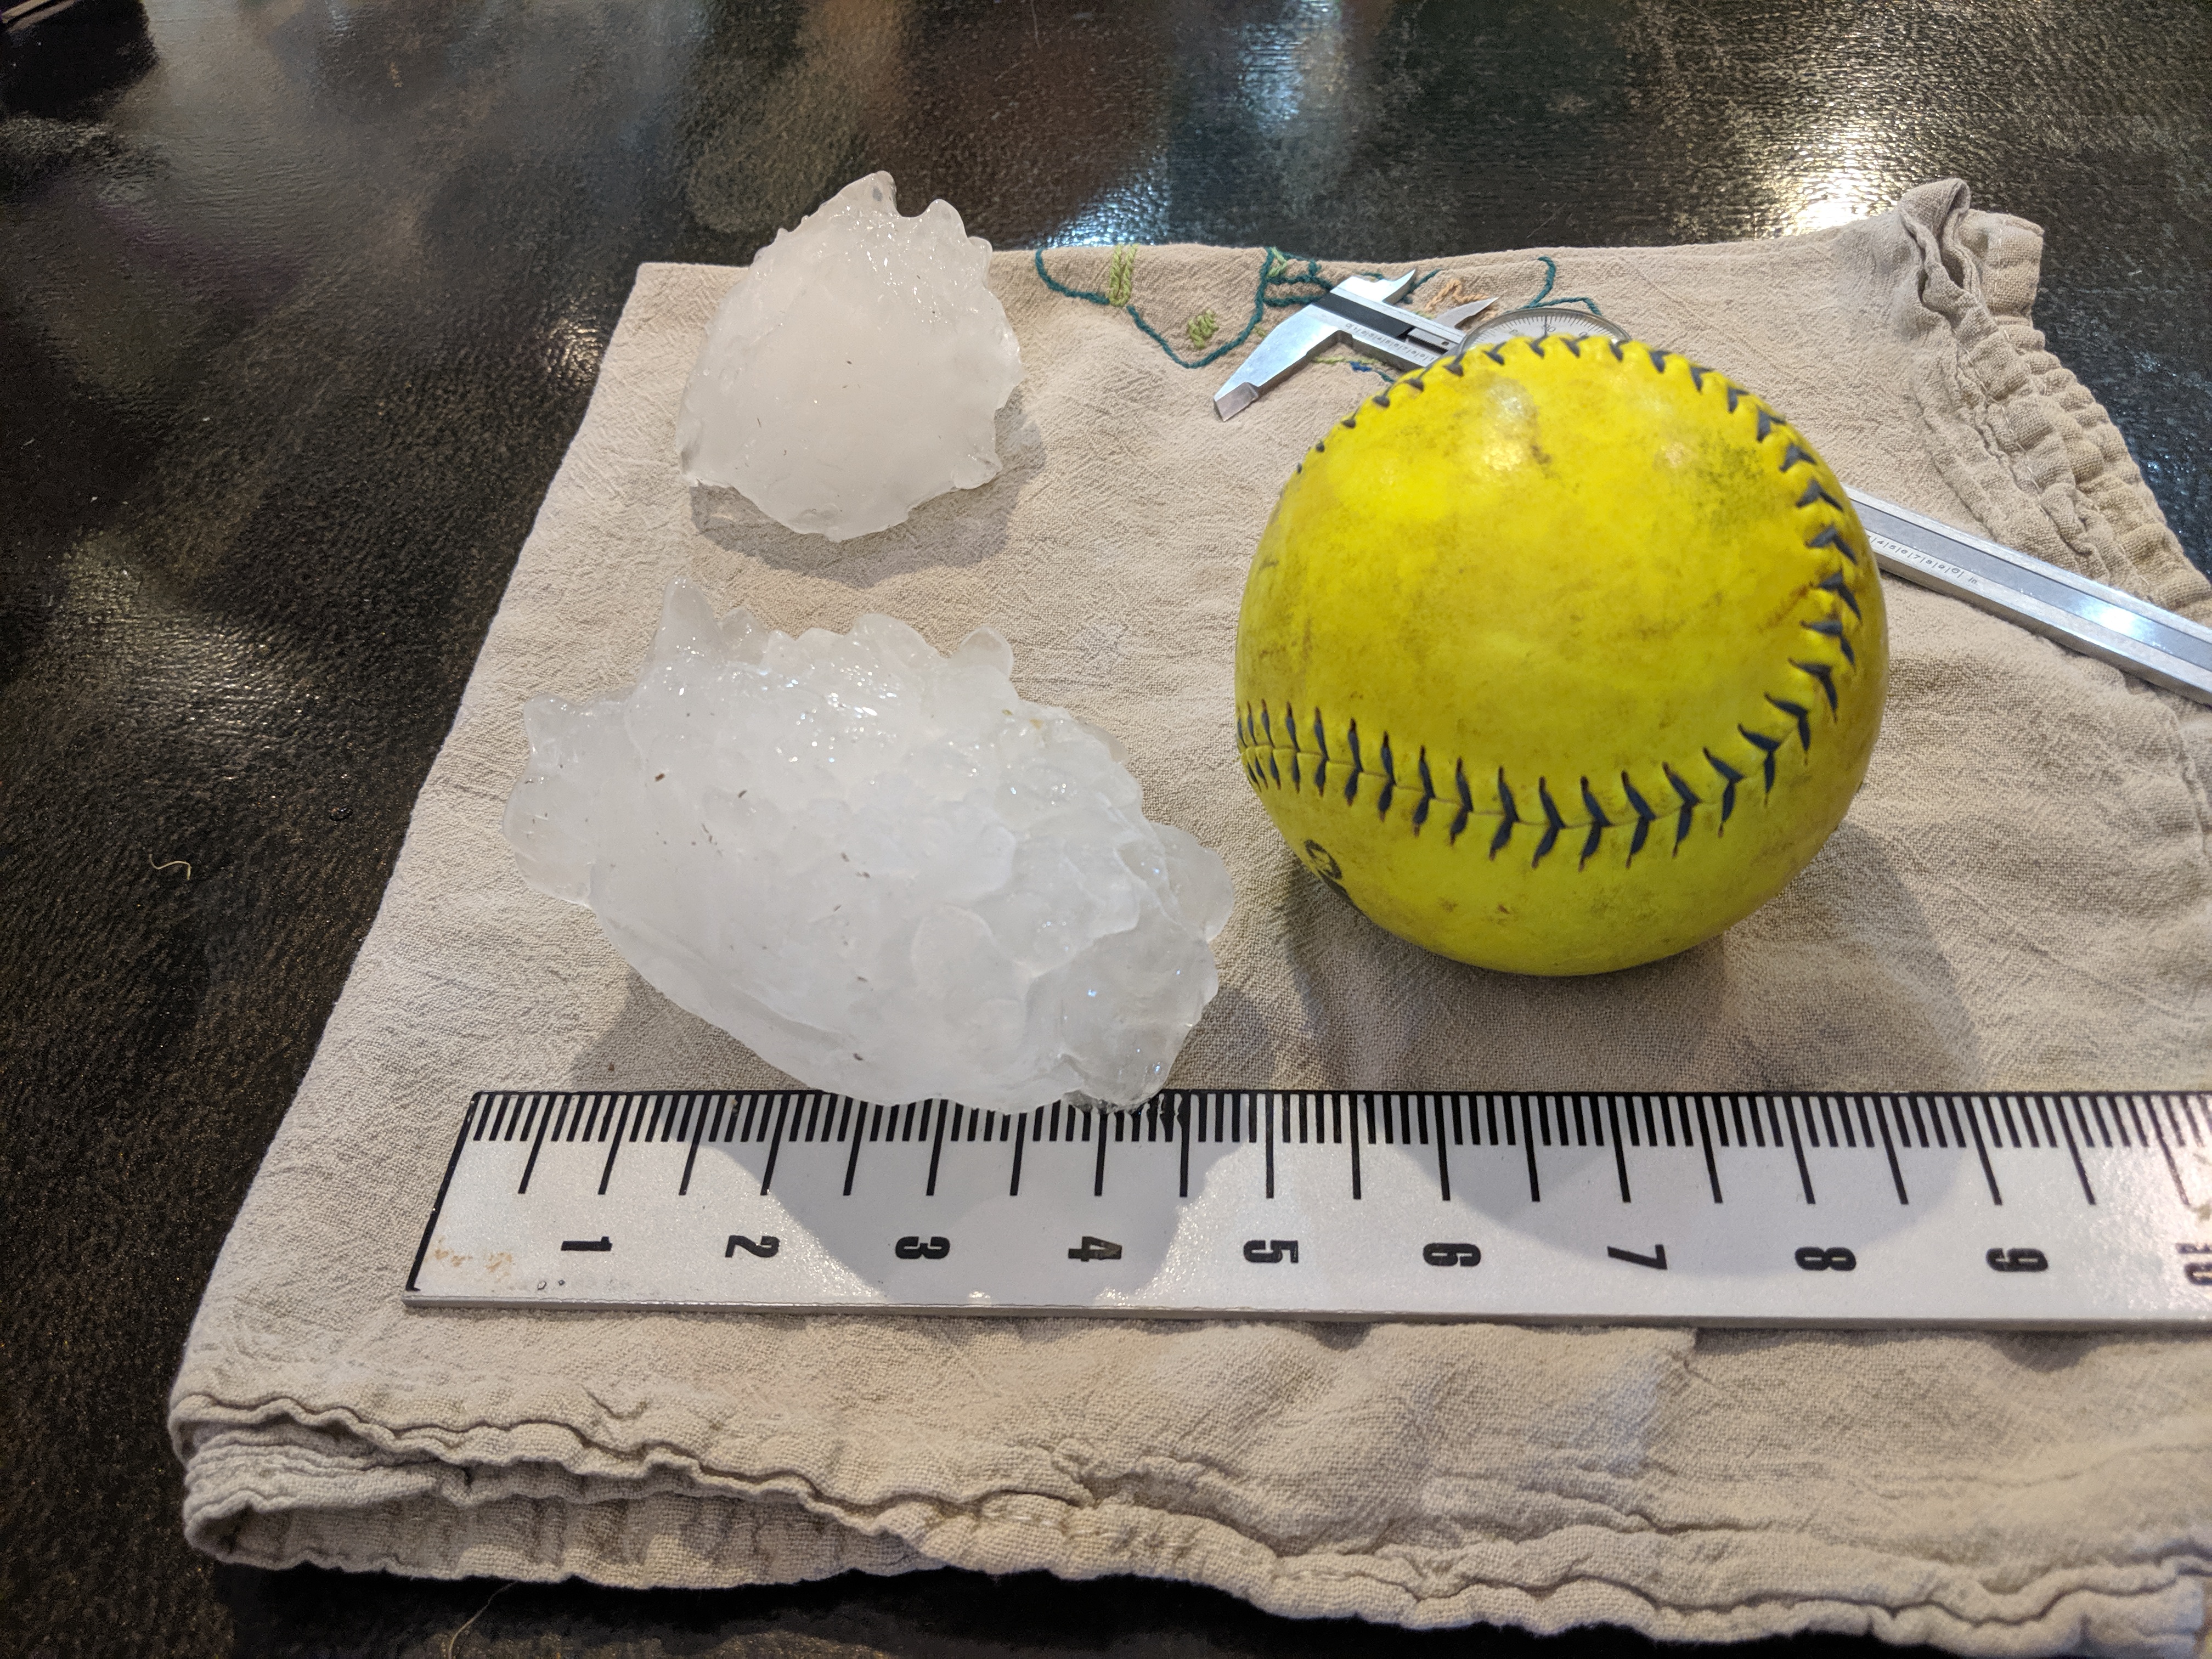 Colorado's record breaking hail stone